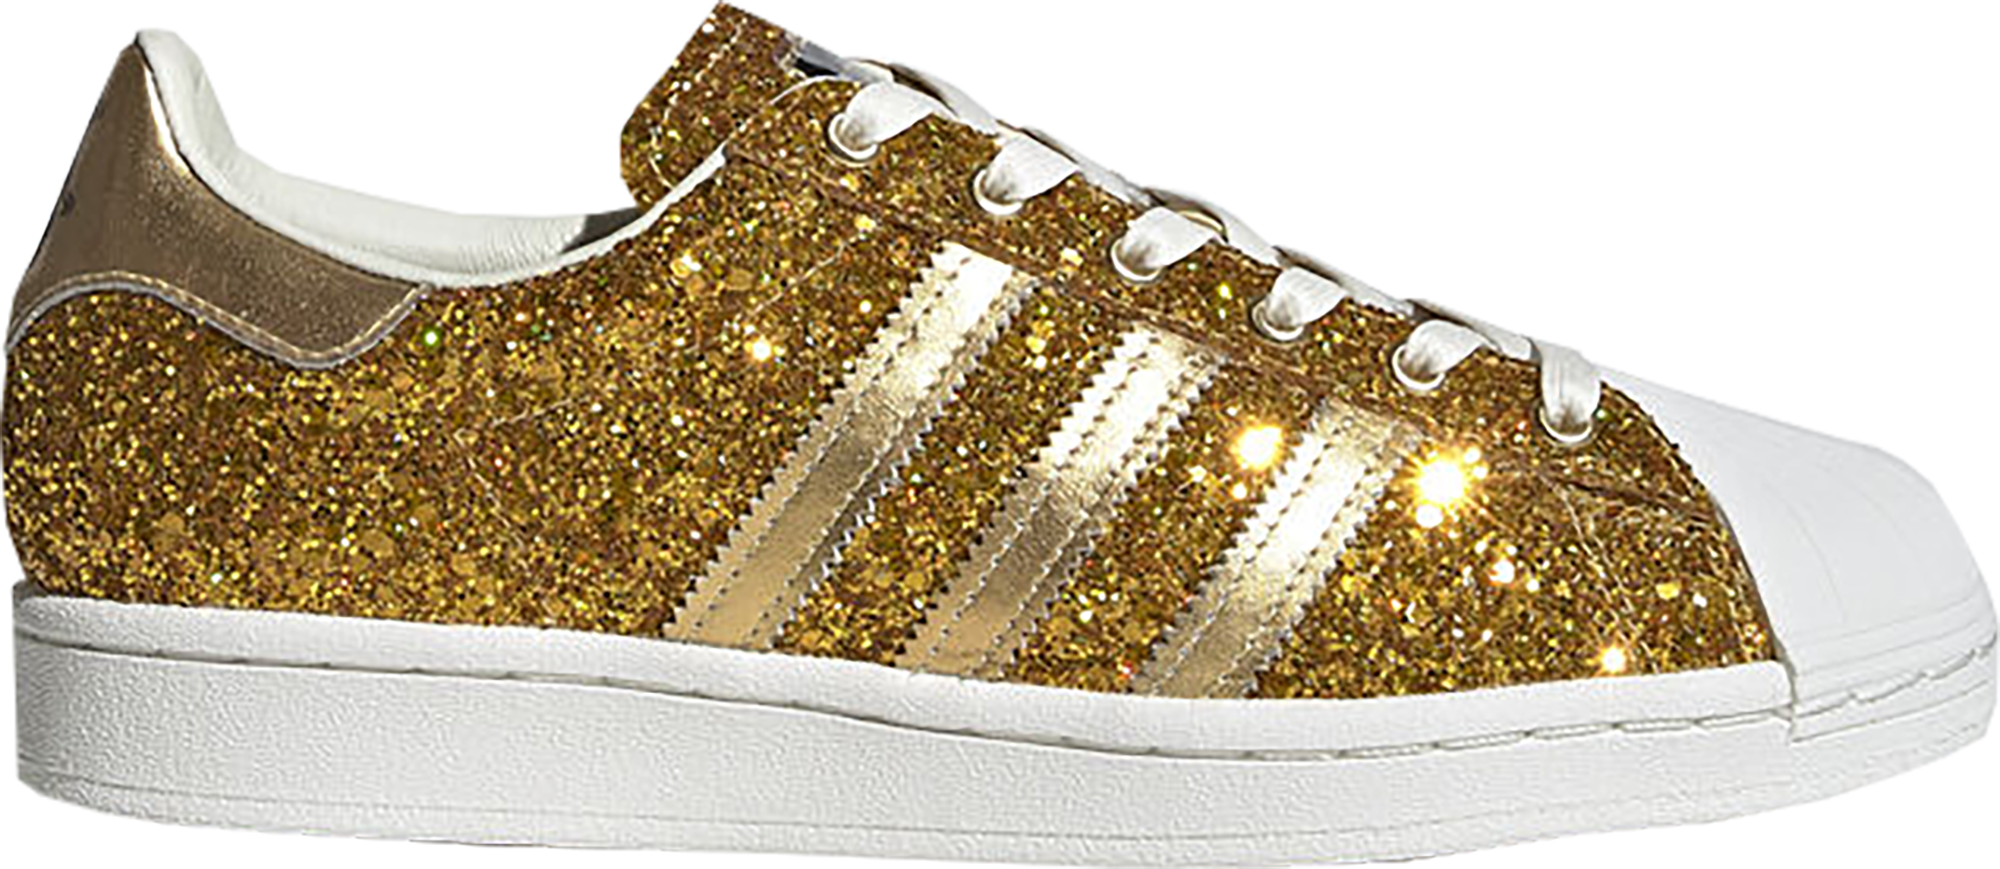 adidas men's originals superstar 2.0 shoes metallic gold/white